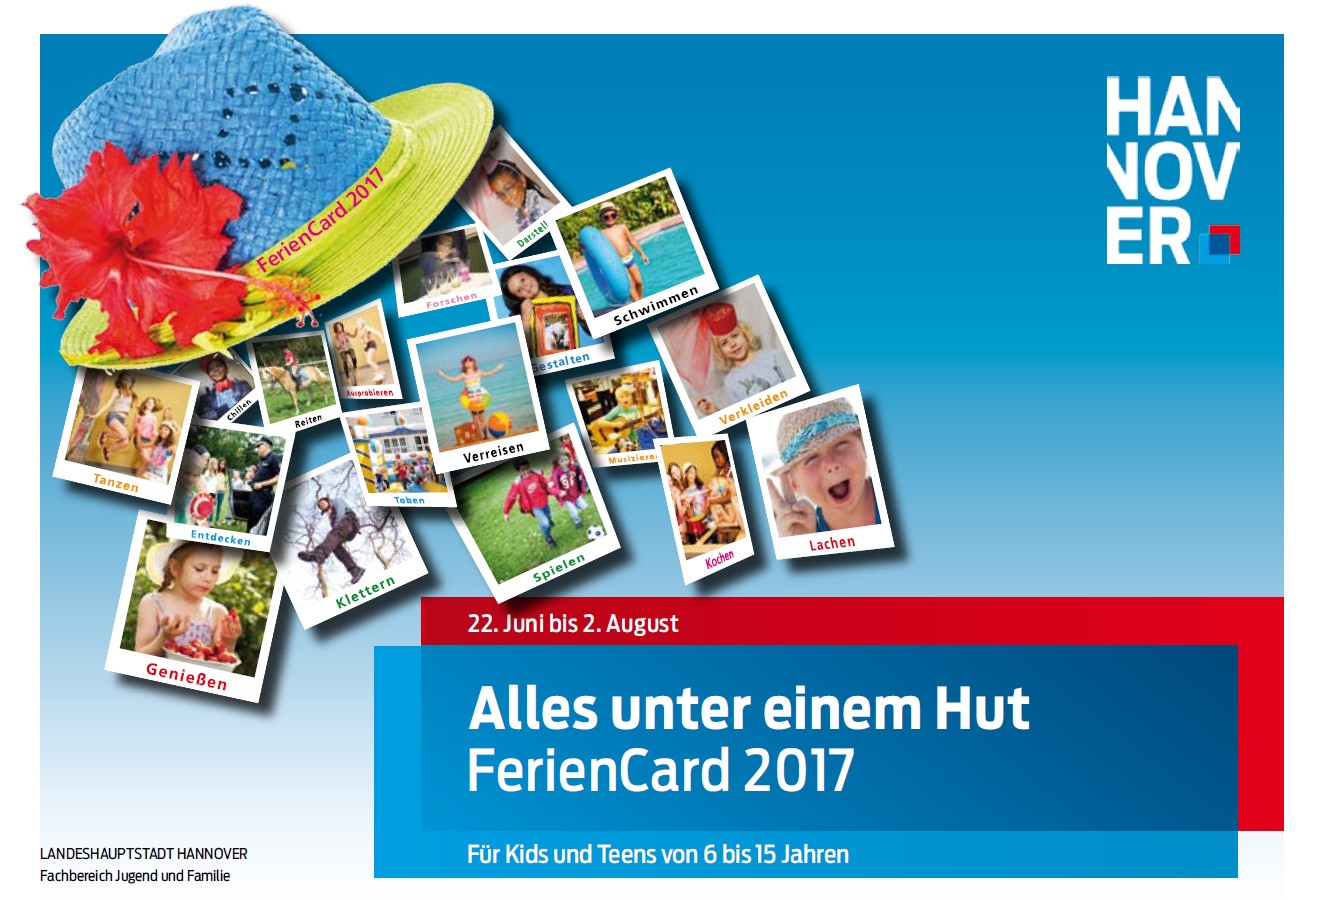 Feriencard 2017